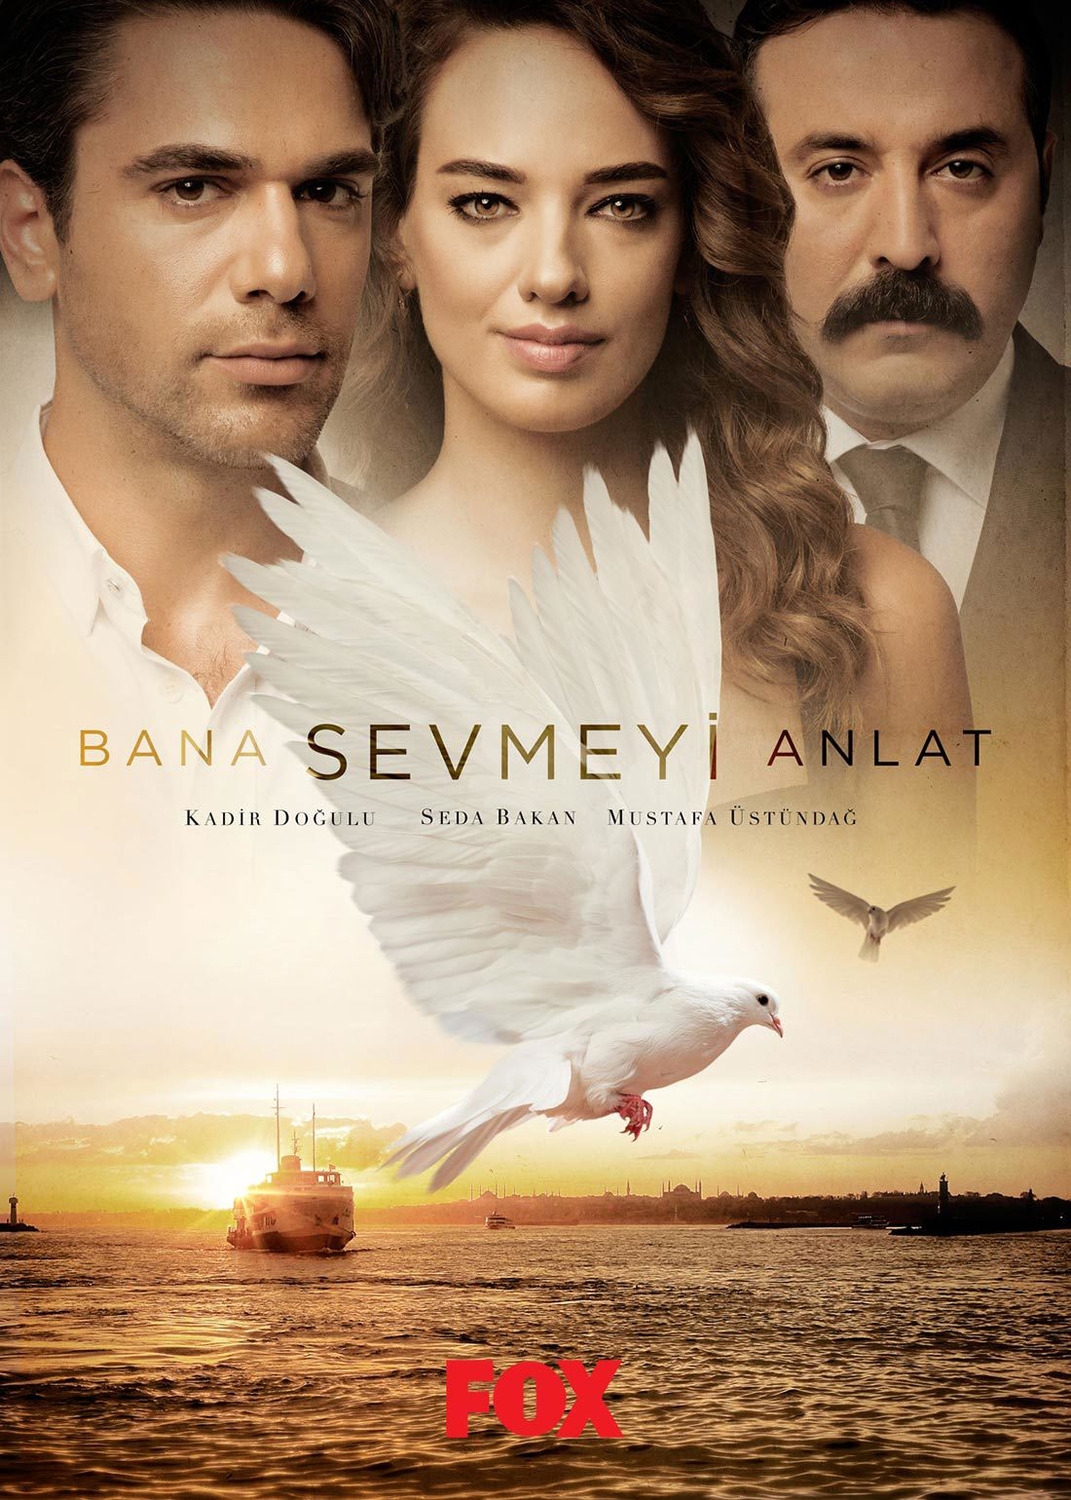 Extra Large TV Poster Image for Bana Sevmeyi Anlat (#1 of 4)